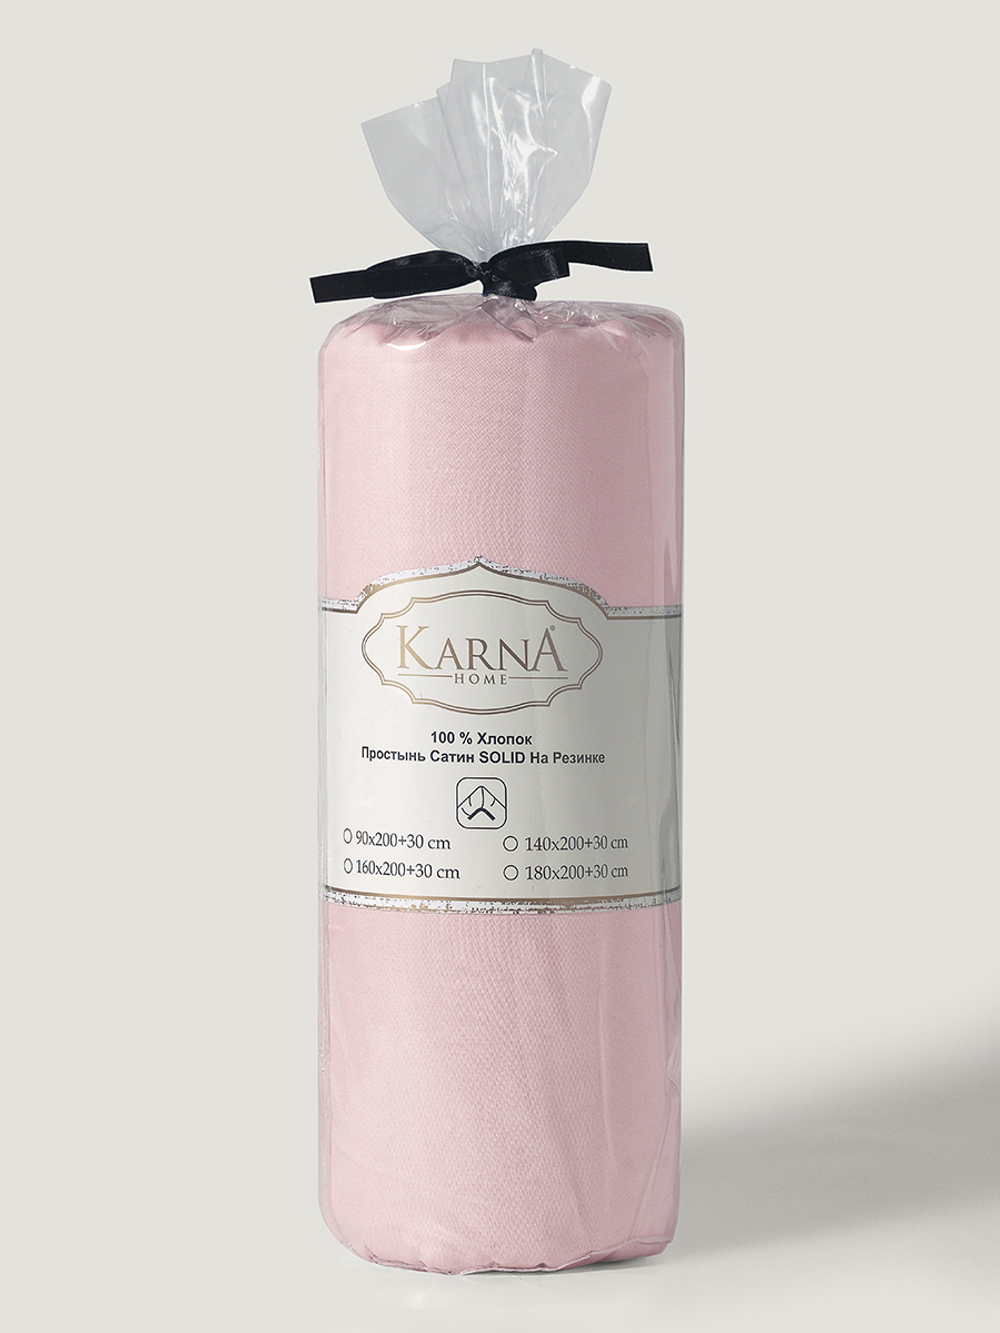 Простынь сатин "KARNA" SOLID  на резинке 160x200+30 см.